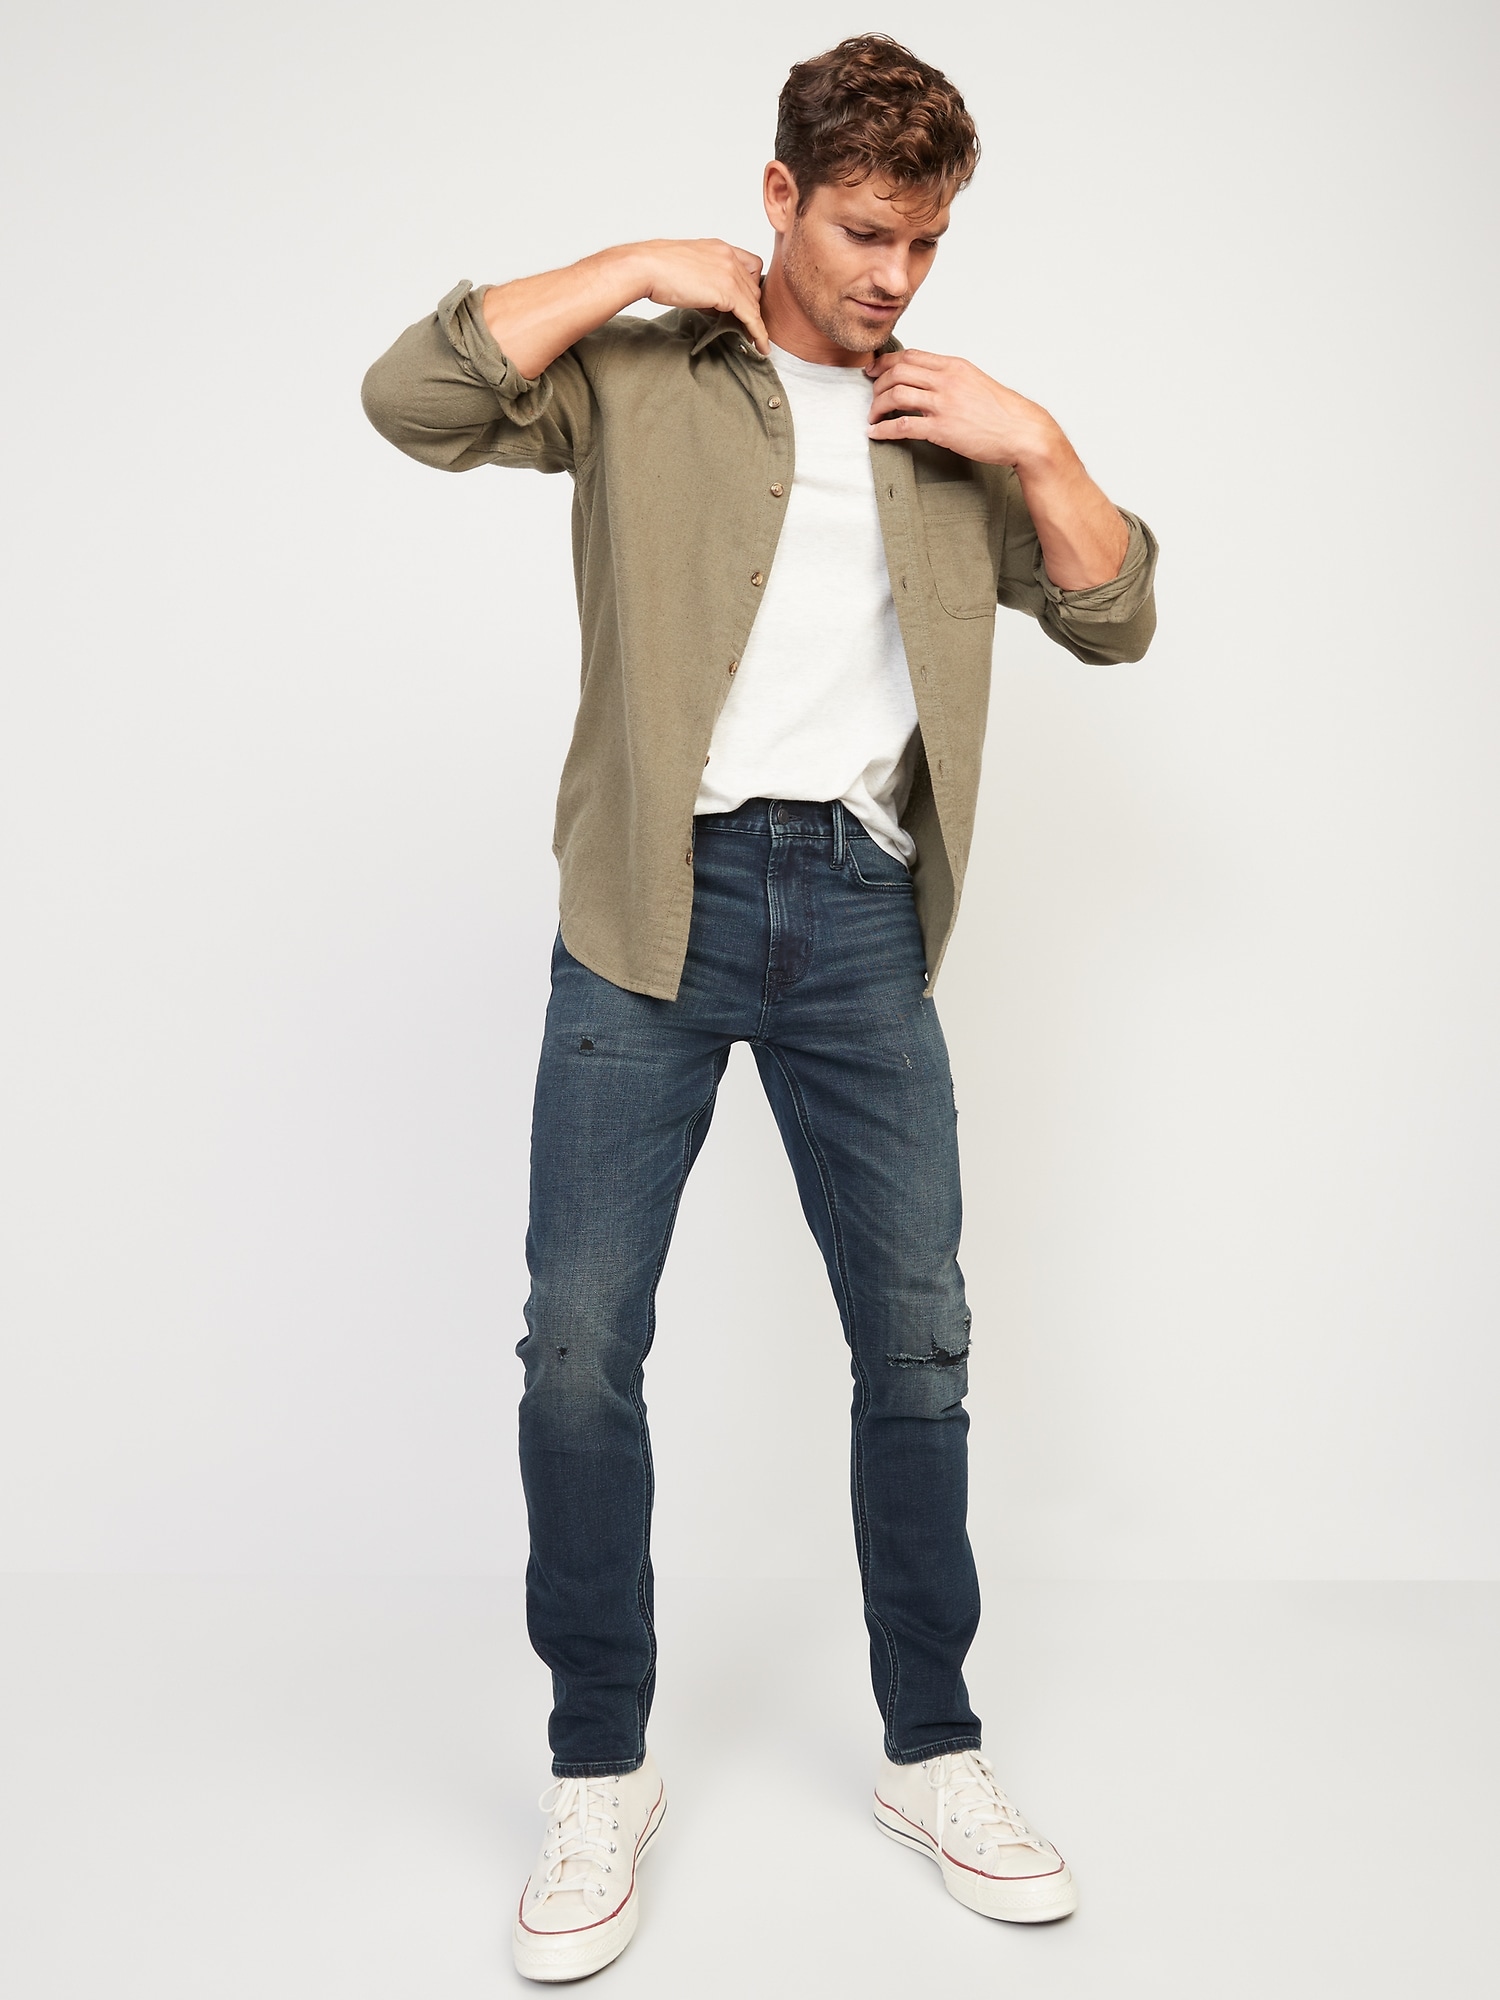 Slim Built-In-Flex Ripped Jeans for Men | Old Navy